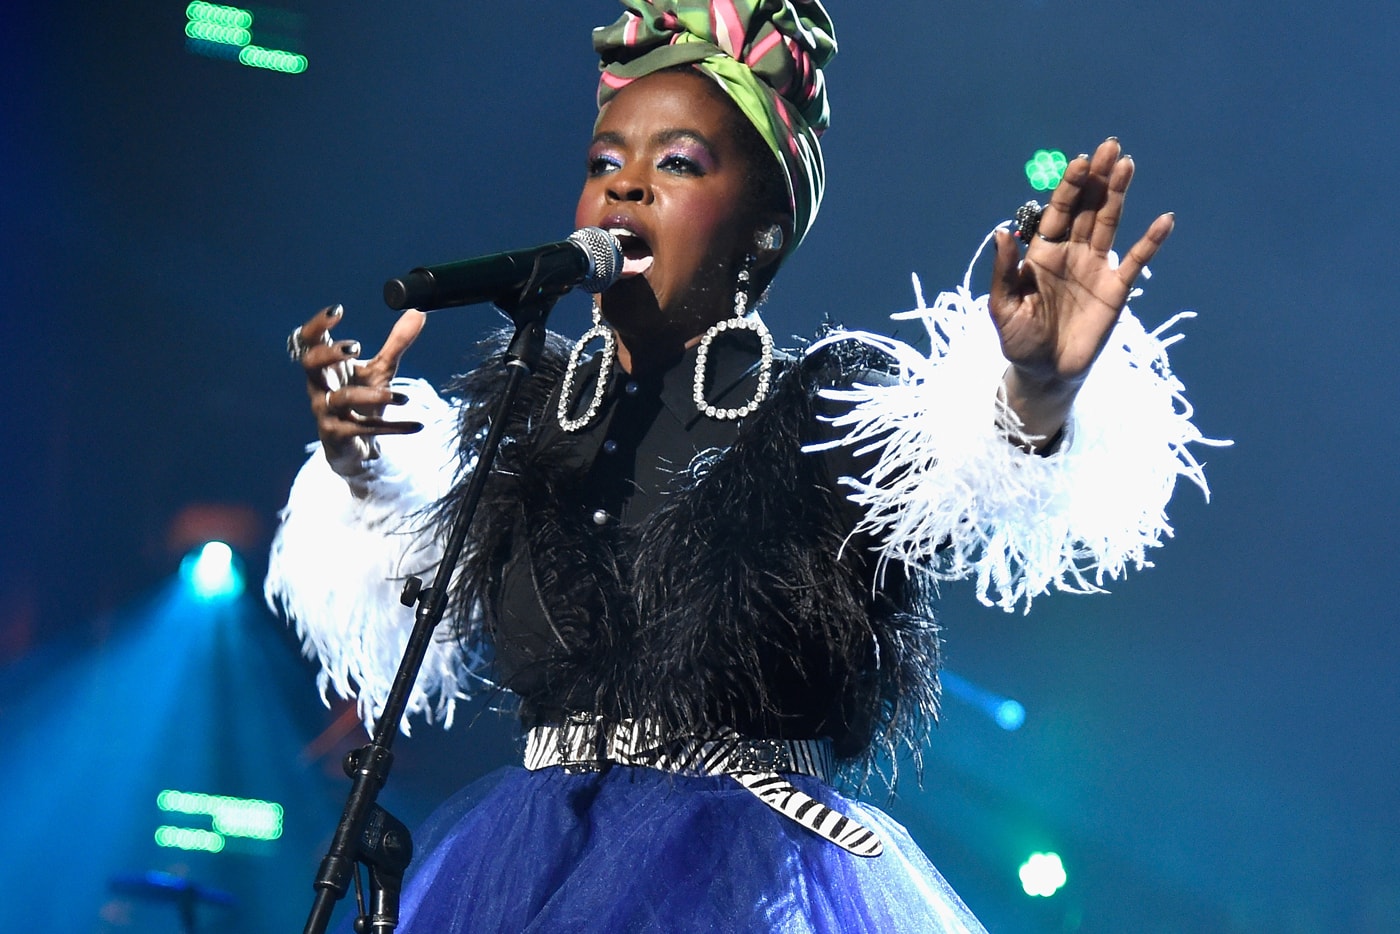 Lauryn Hill The Miseducation of Lauryn Hill Anniversary Tour Album Leak Single Music Video EP Mixtape Download Stream Discography 2018 Live Show Performance Tour Dates Album Review Tracklist Remix